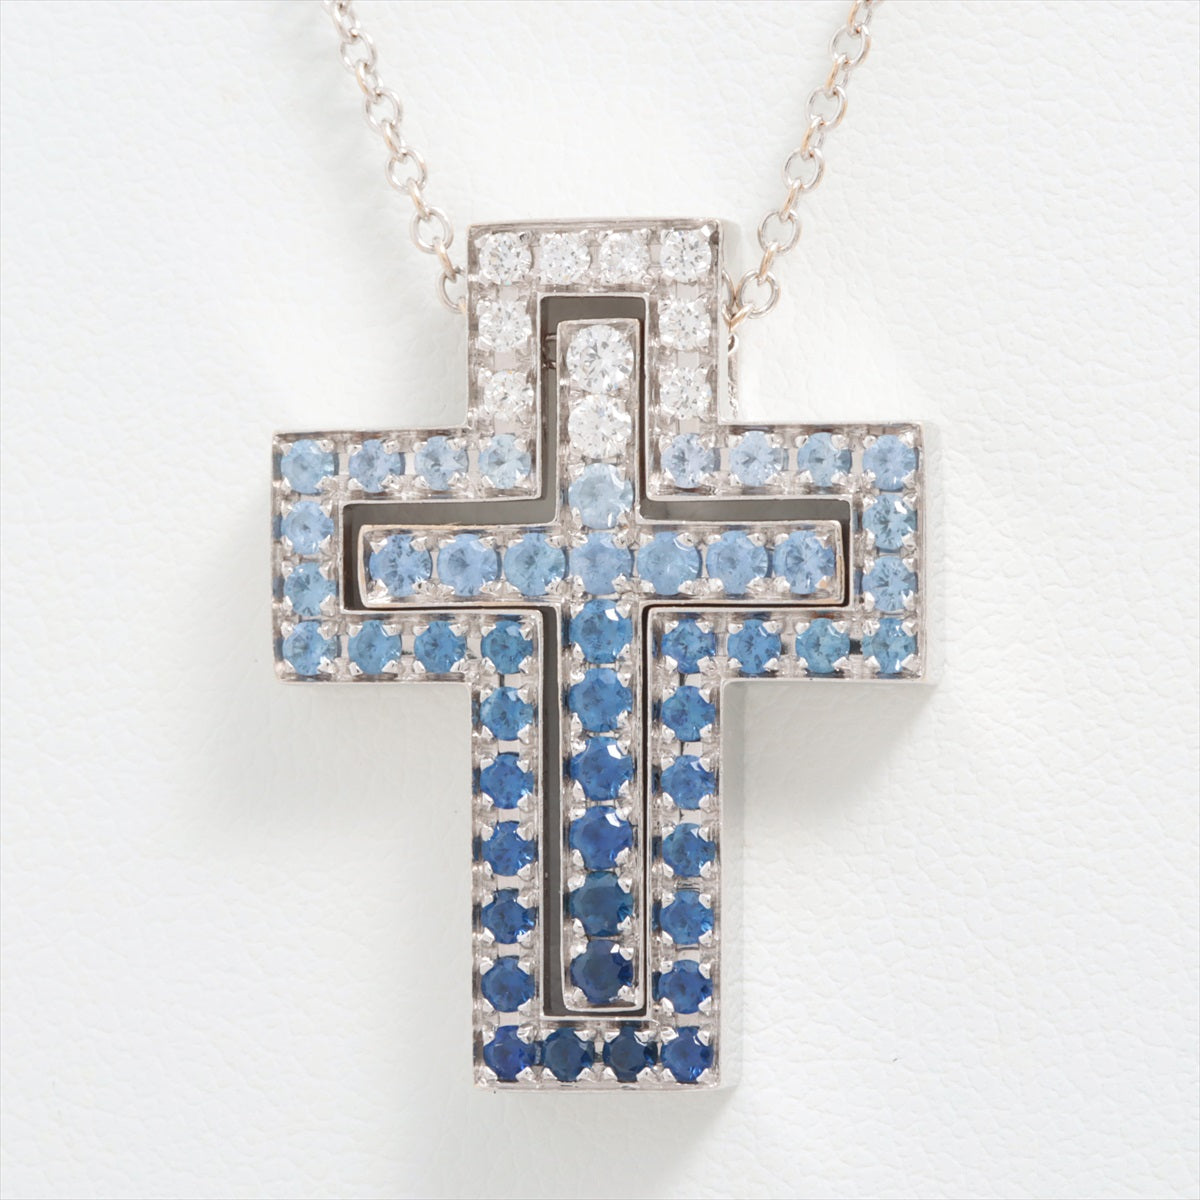 Damiani Belle Époque Cross Sapphire diamond Necklace 750(WG) 11.5g